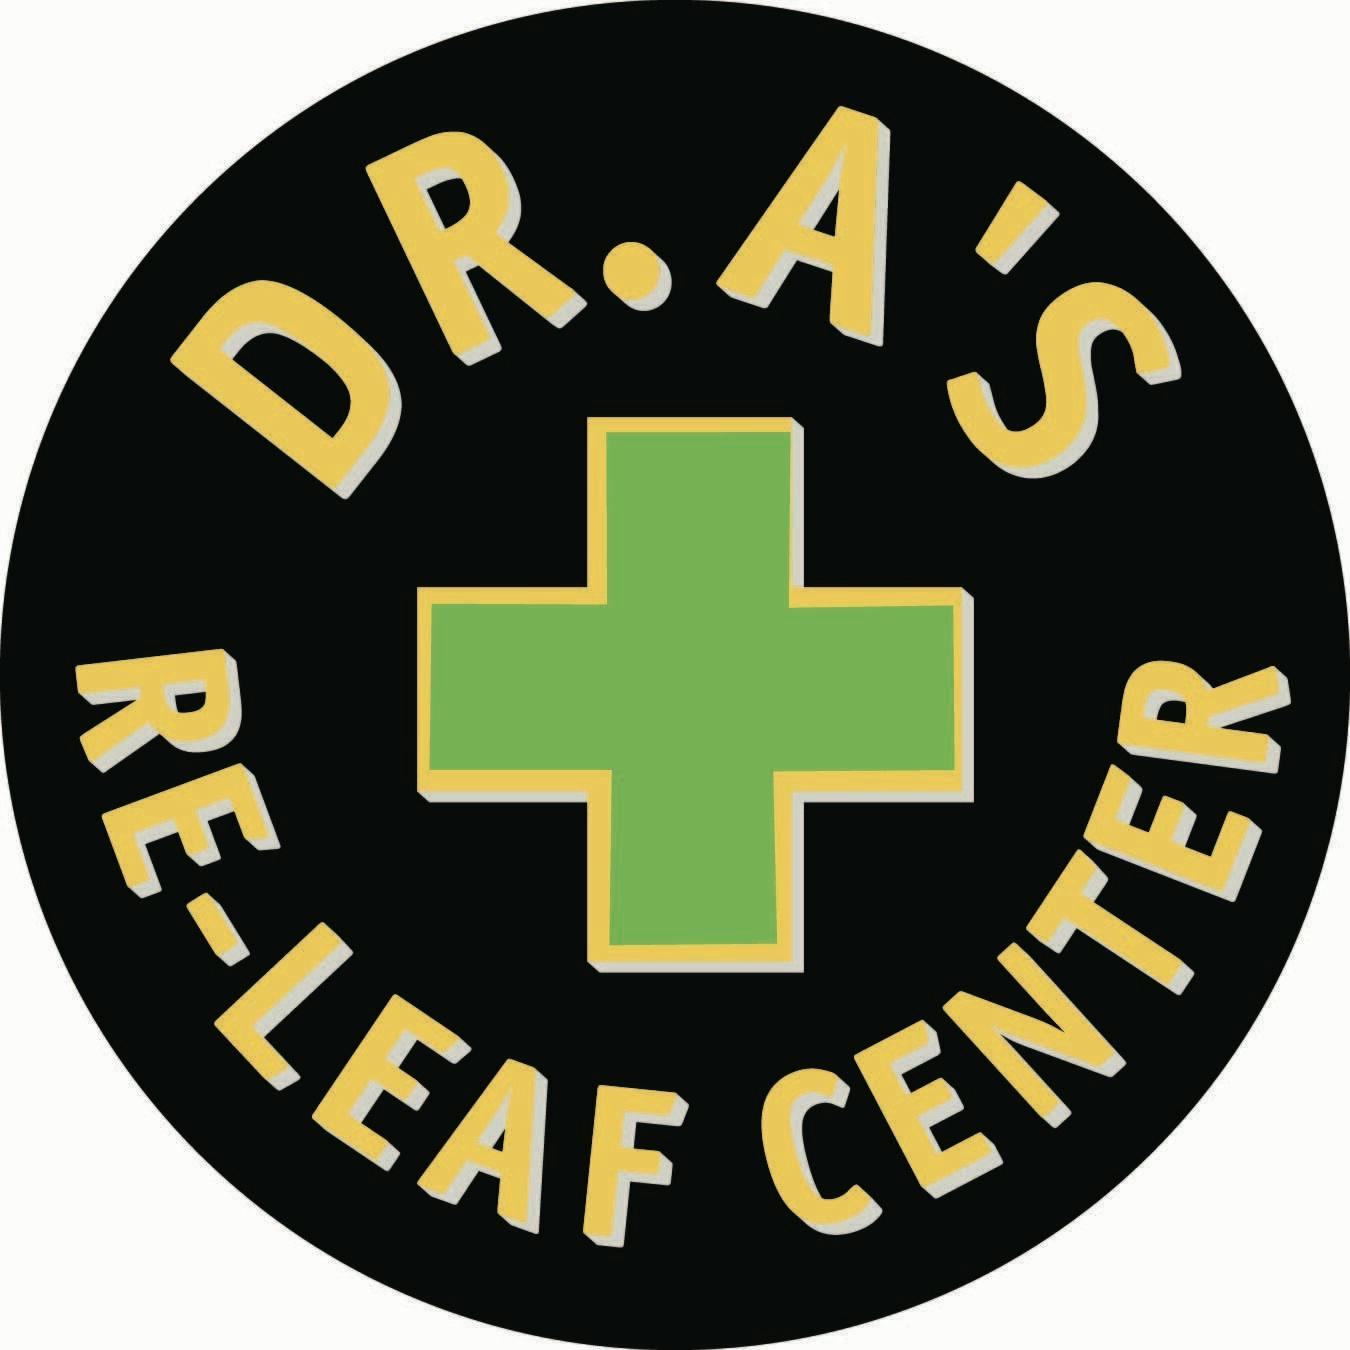 Dr. A's Re-Leaf Center - Edwardsburg Cannabis Dispensary-logo